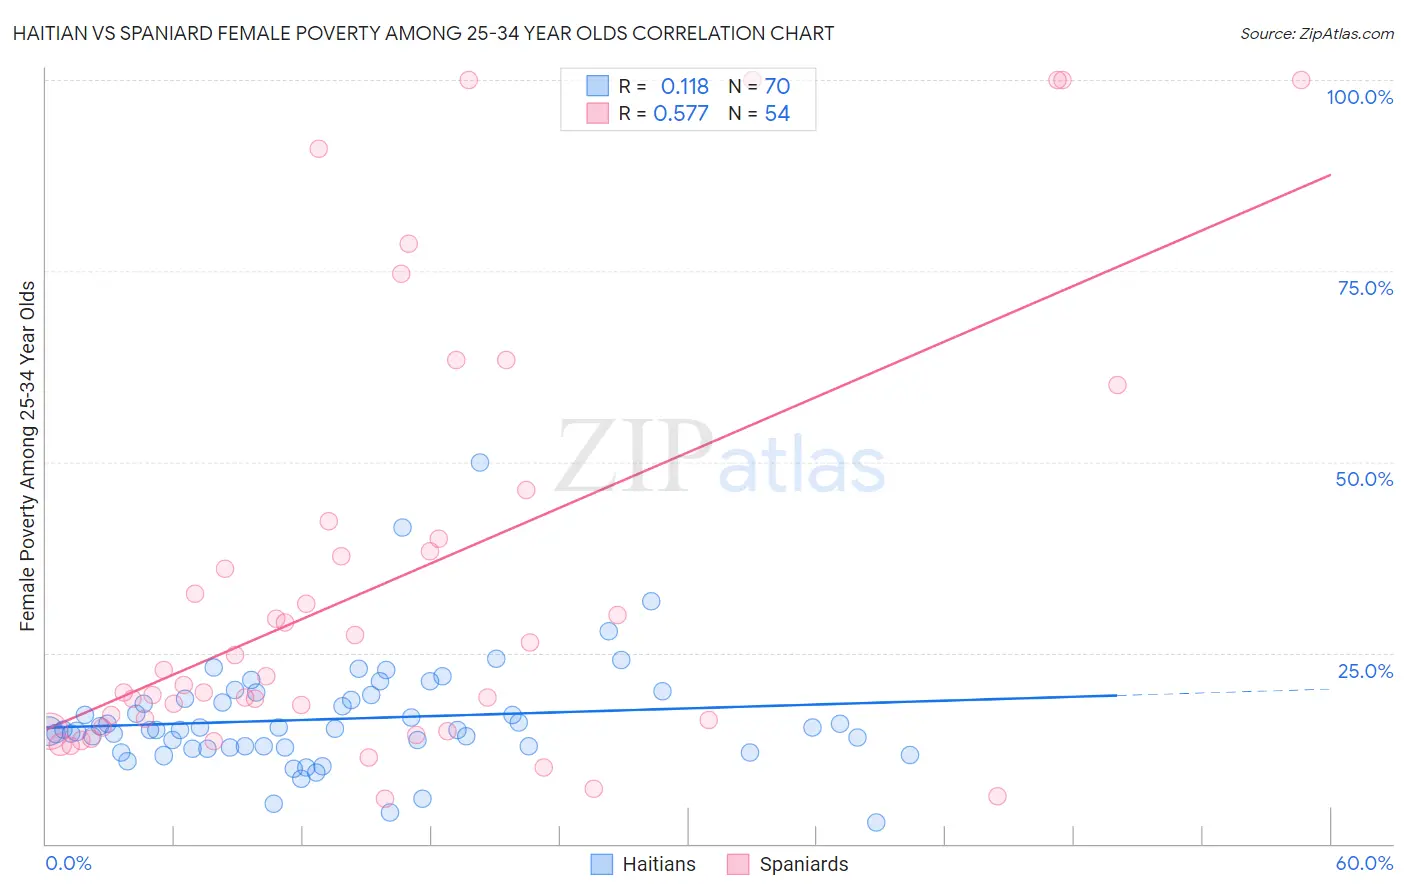 Haitian vs Spaniard Female Poverty Among 25-34 Year Olds